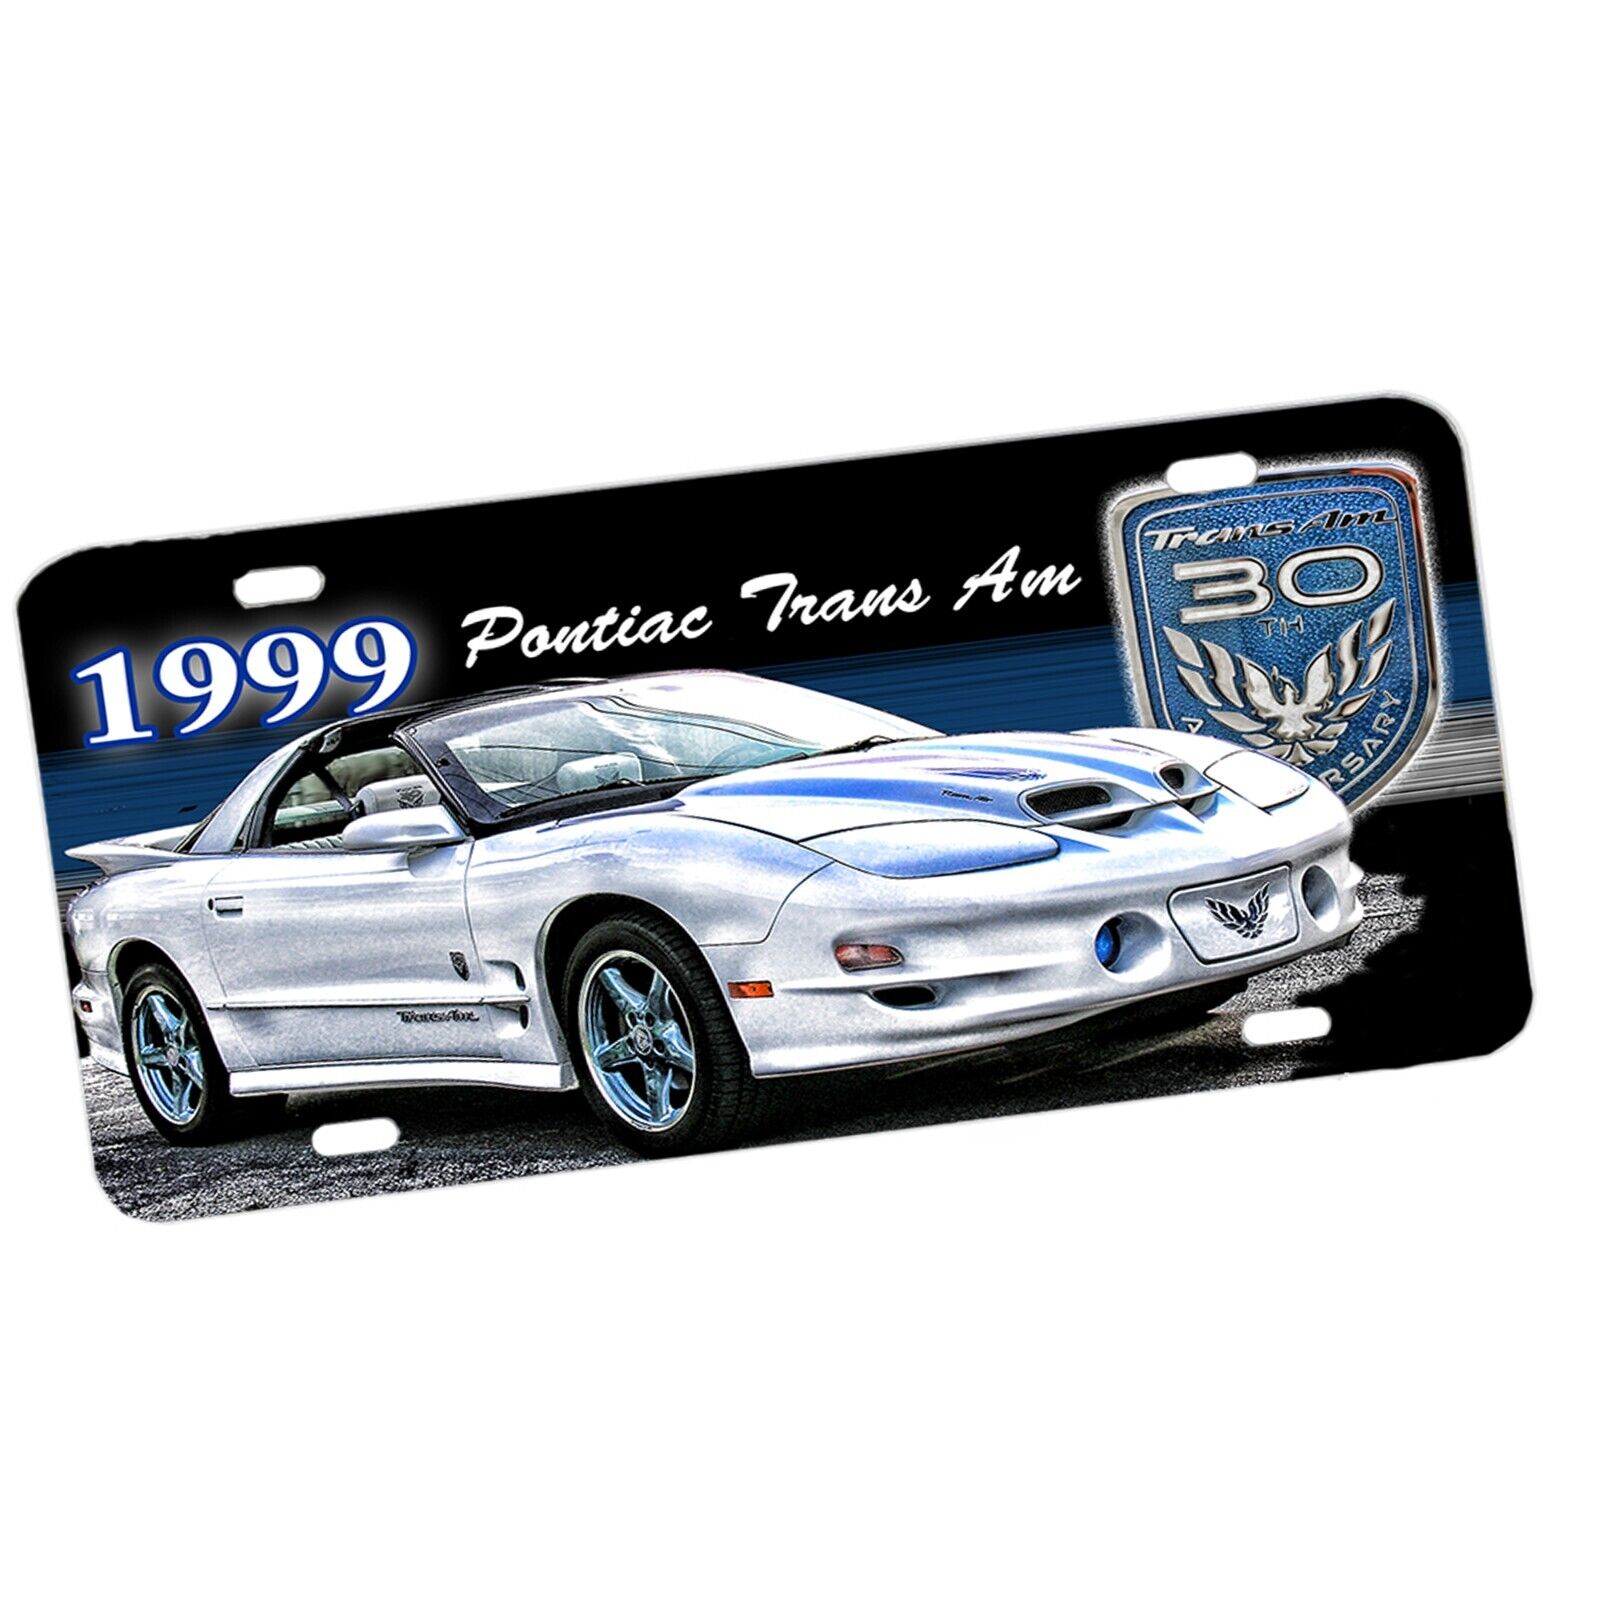 30th Anniversary 1999 Firebird Trans Am Classic Muscle Car License Plate